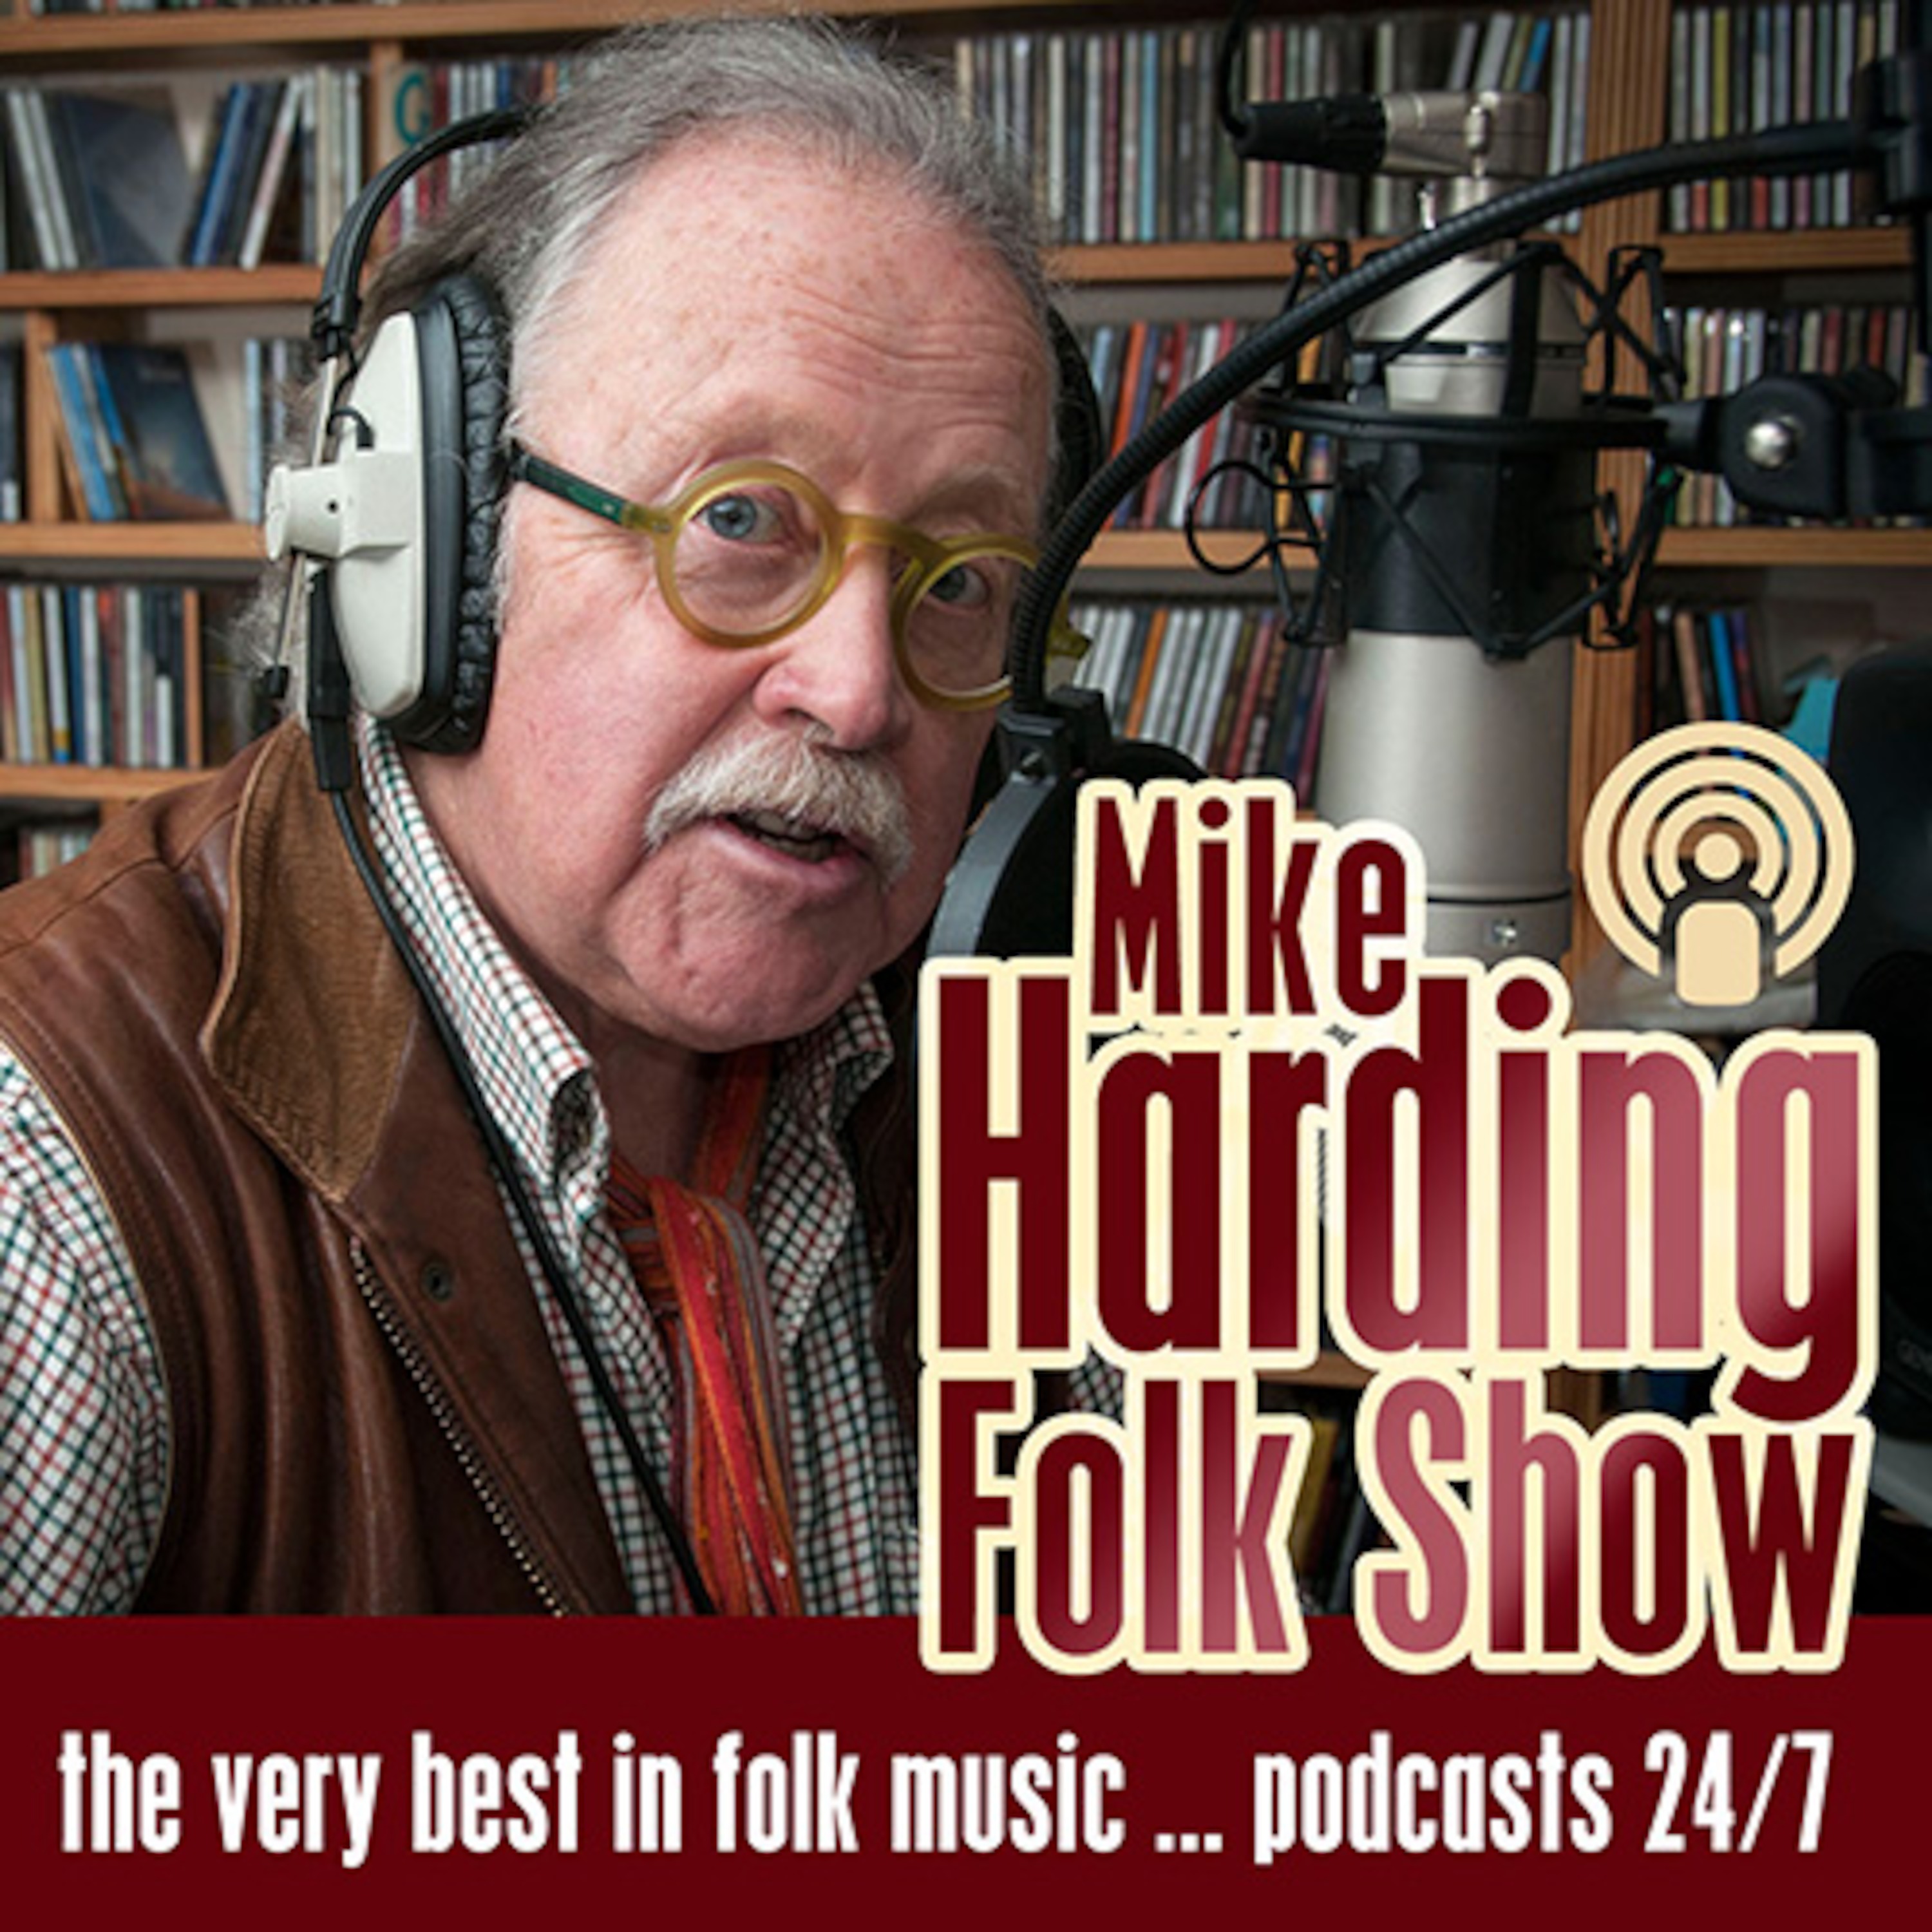 Mike Harding Folk Show 108